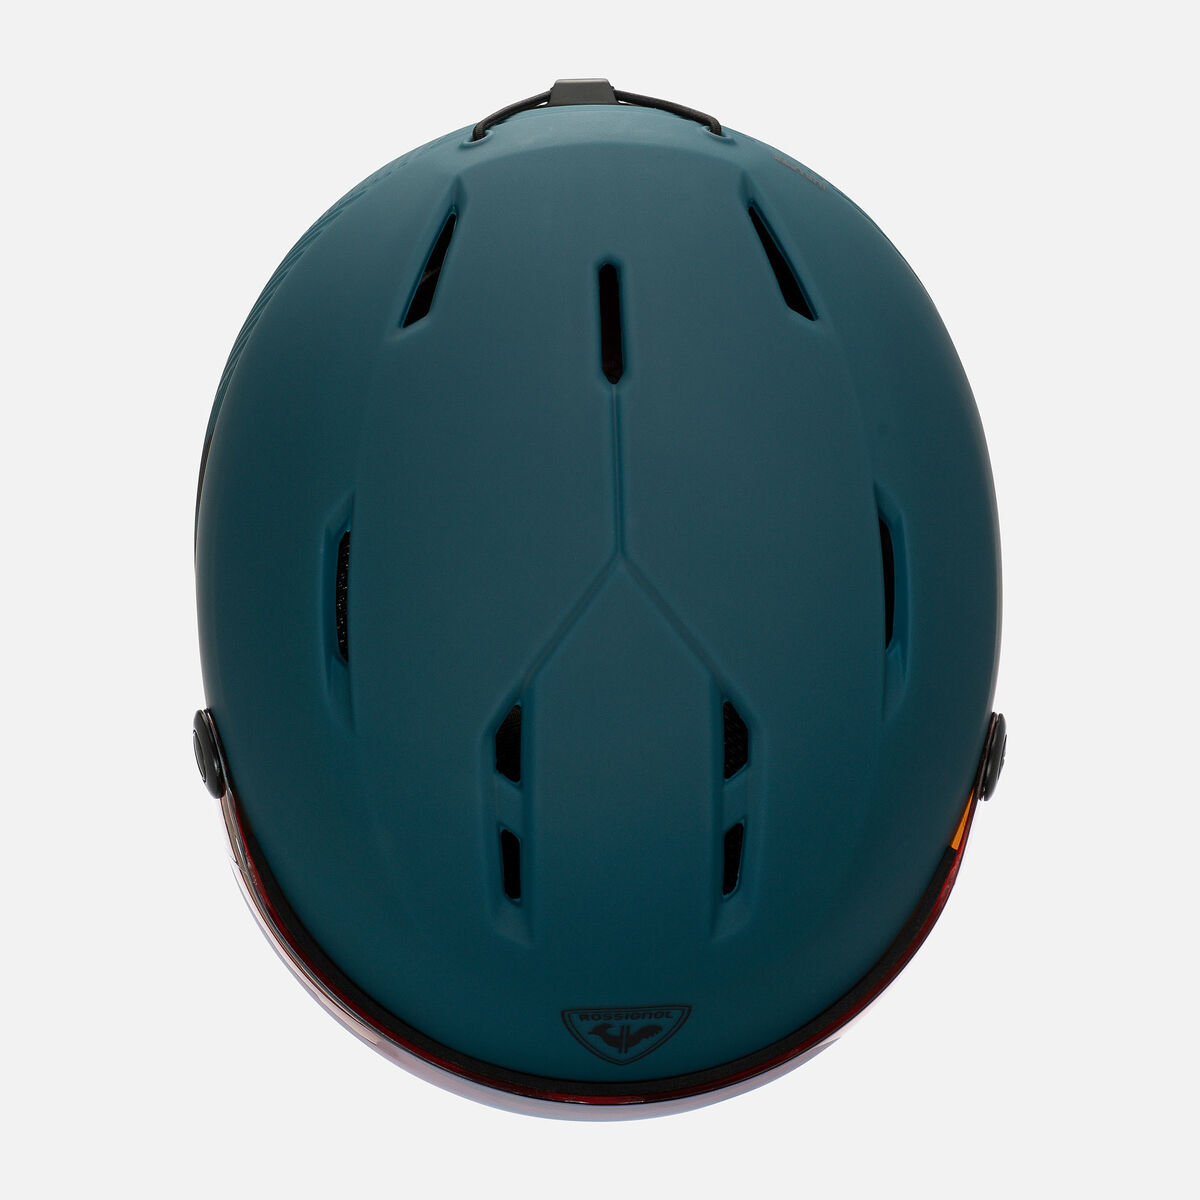 Unisex Helmet Fit Visor Impacts